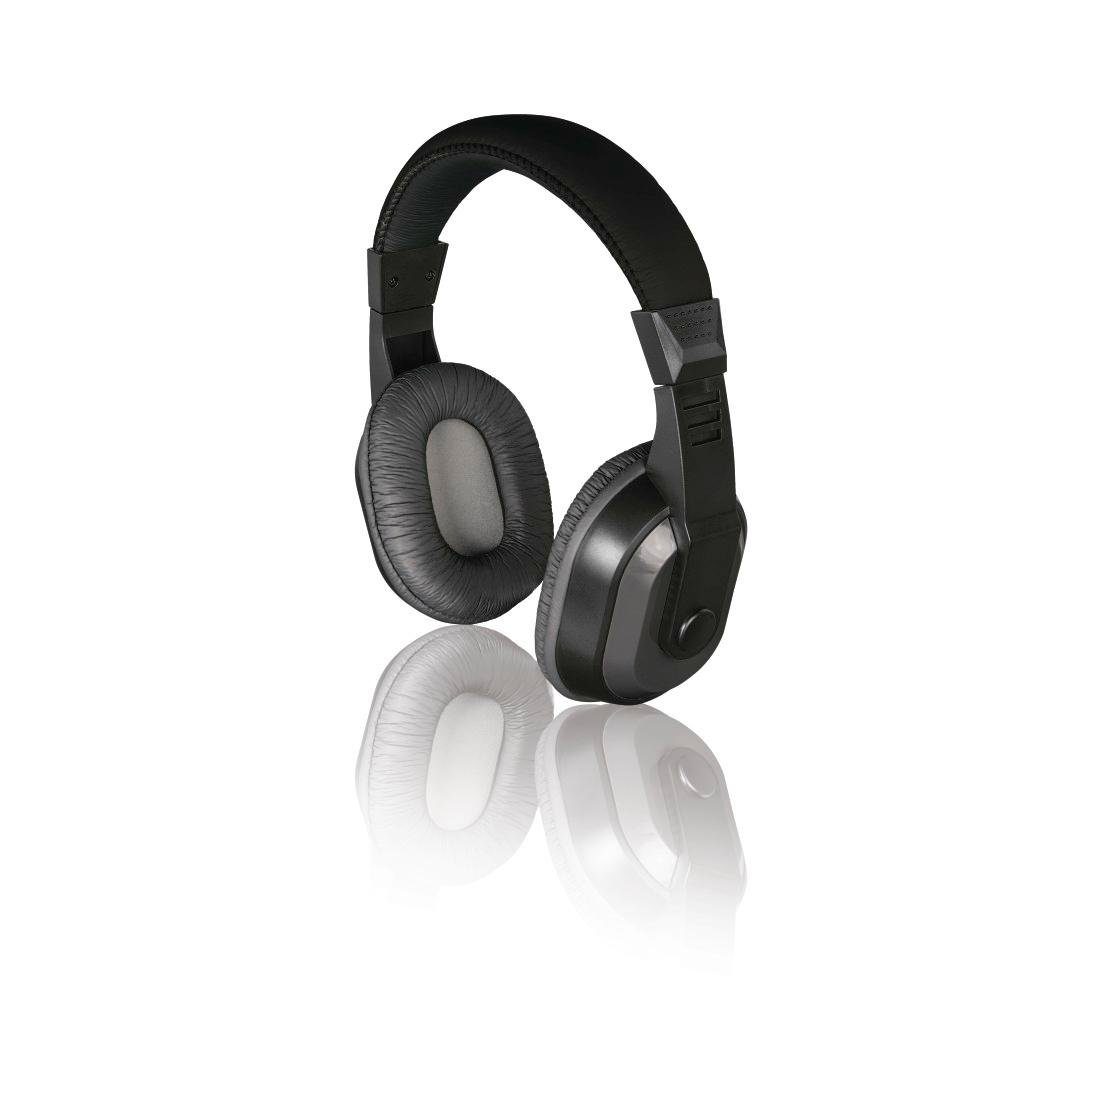 Thomson Kopfhörer Over Ear-Kopfhörer Klang) mit Geräuschreduzierung, Tragekomfort, Ear angenehmer guter (Geräuschisolierung, schwarz Over- passiver